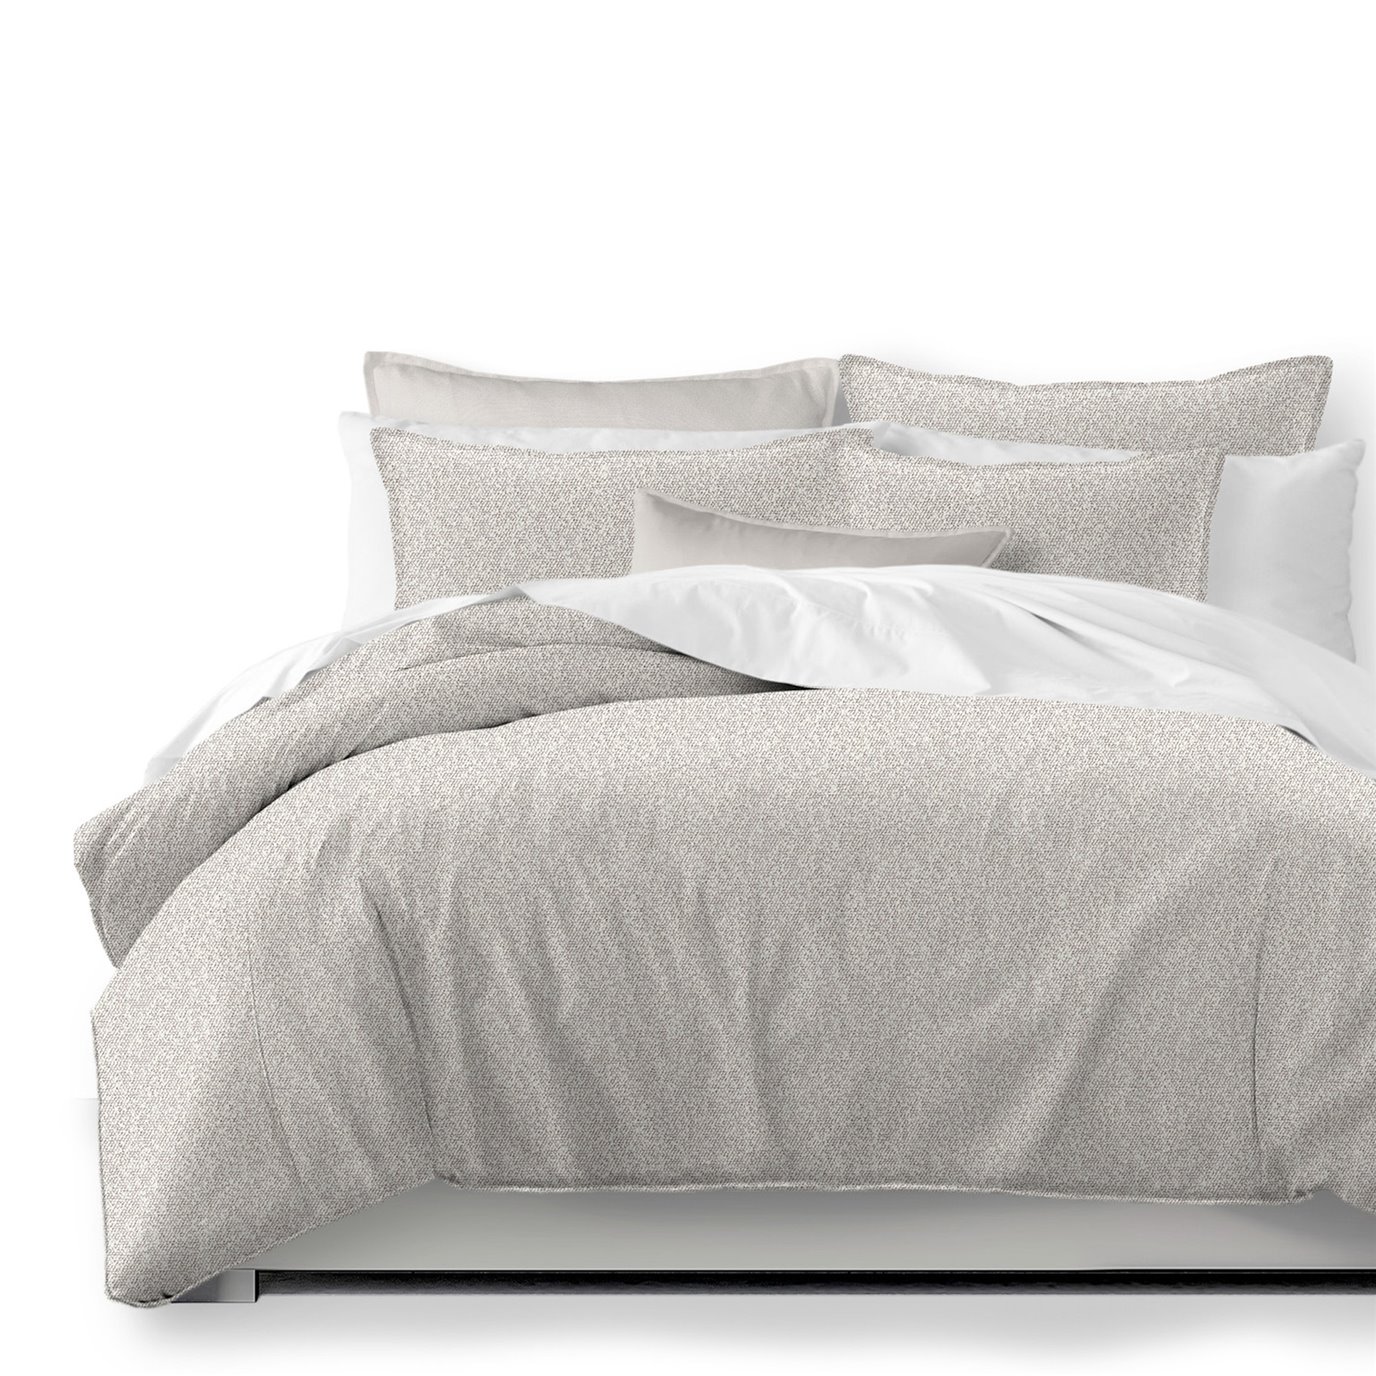 Jackson Boucle Cream Comforter and Pillow Sham(s) Set - Size Super King